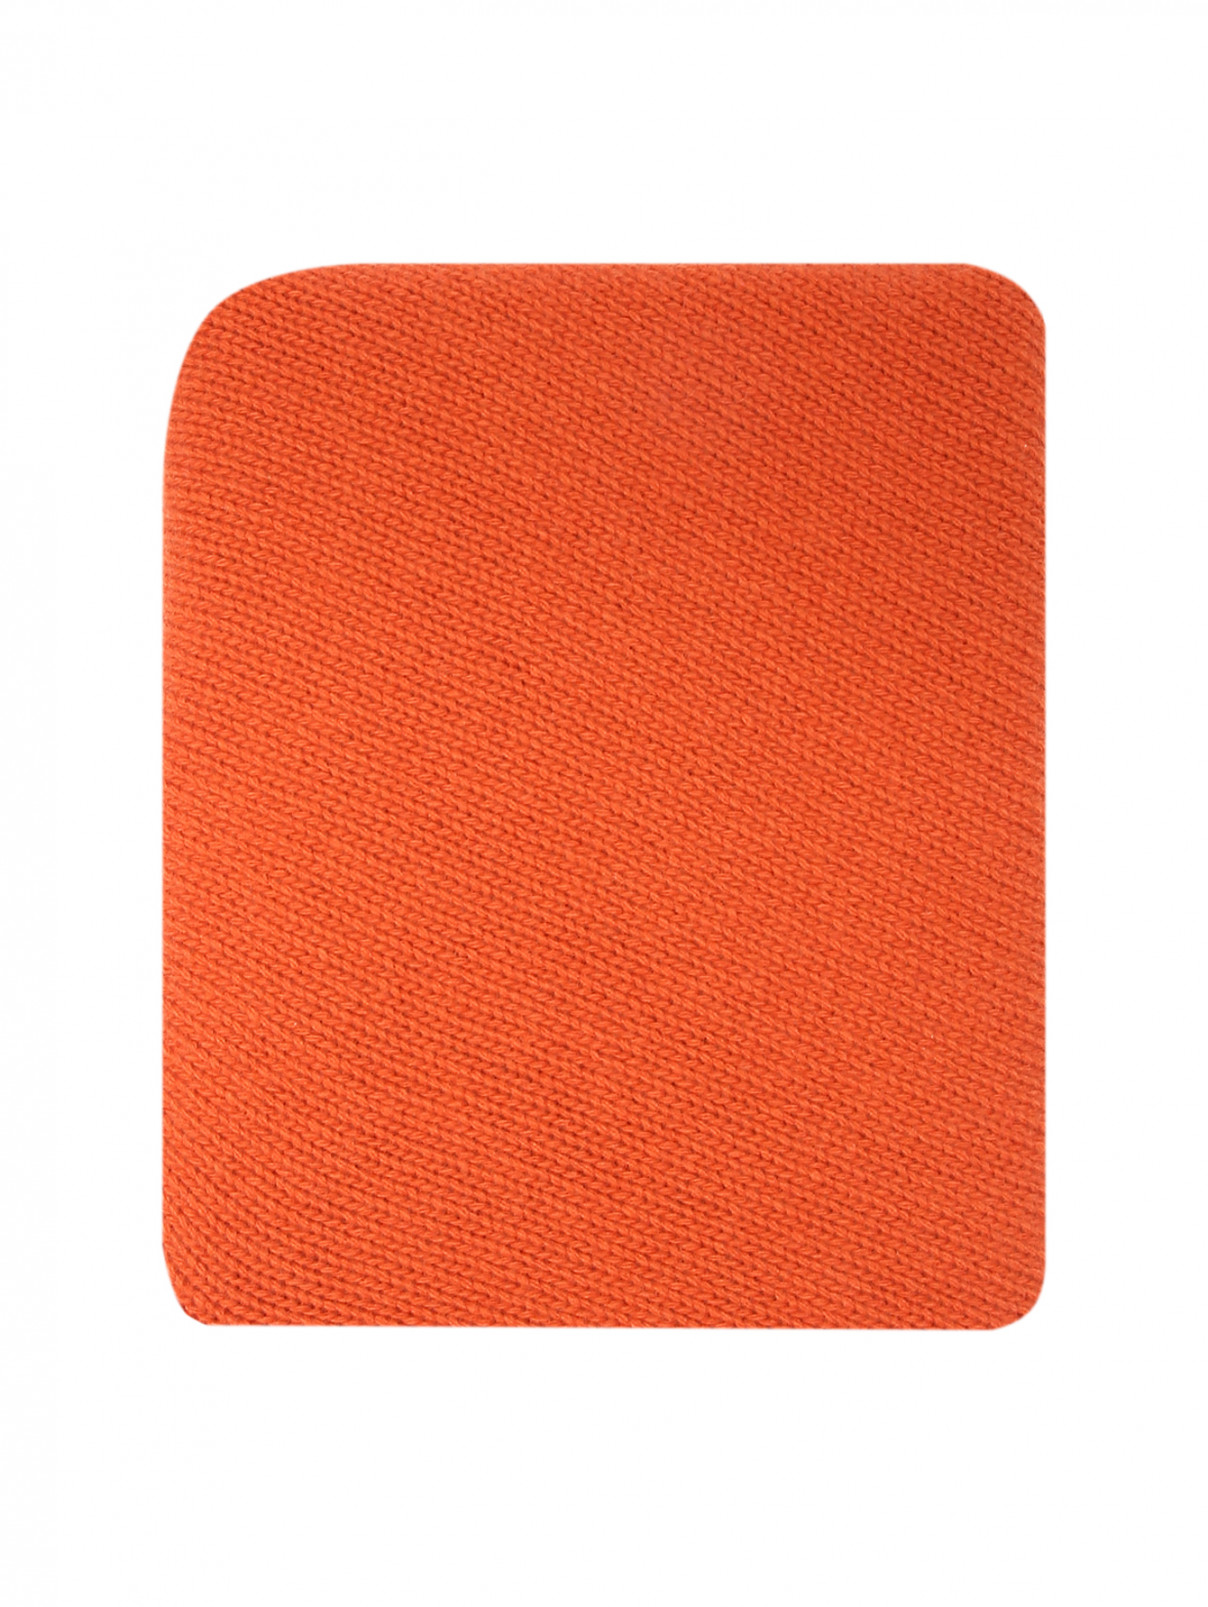 Шарф с бахромой из шерсти Weekend Max Mara  –  Общий вид  – Цвет:  Оранжевый